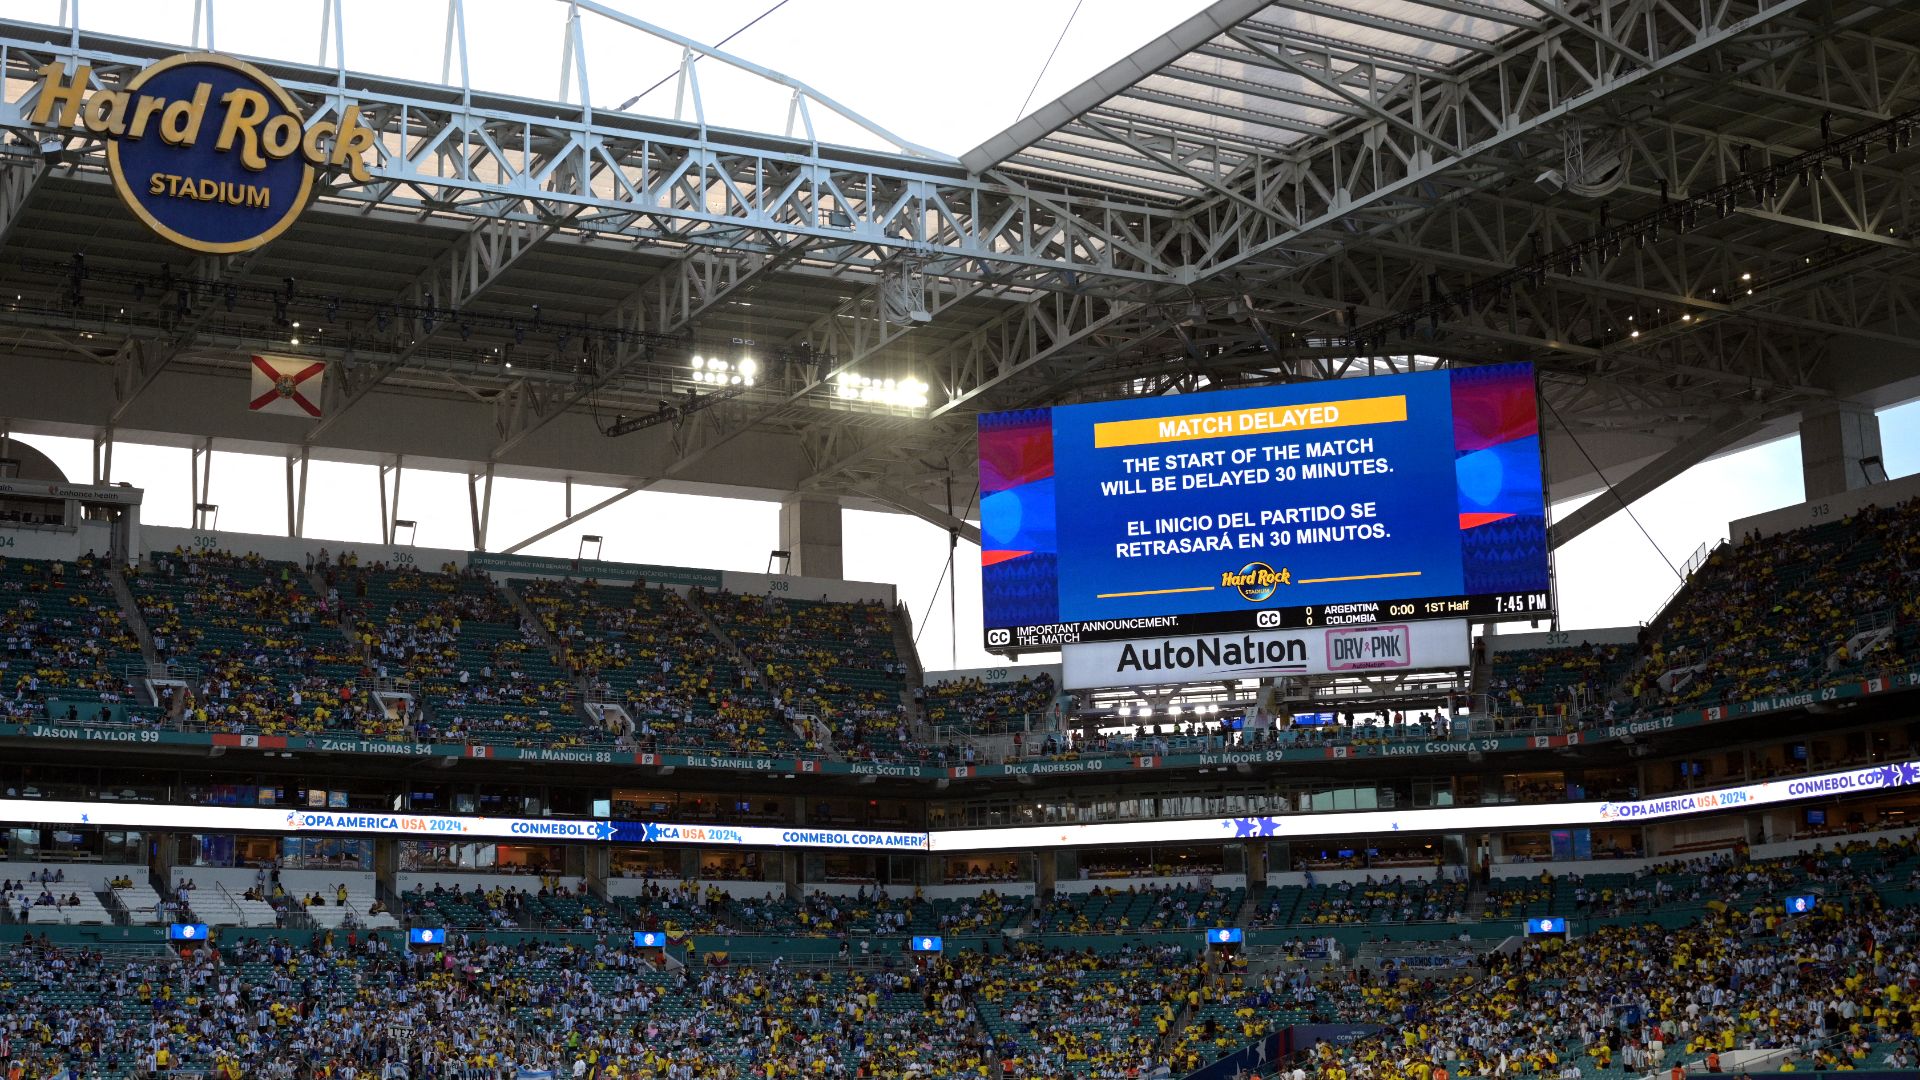 Copa America final delayed